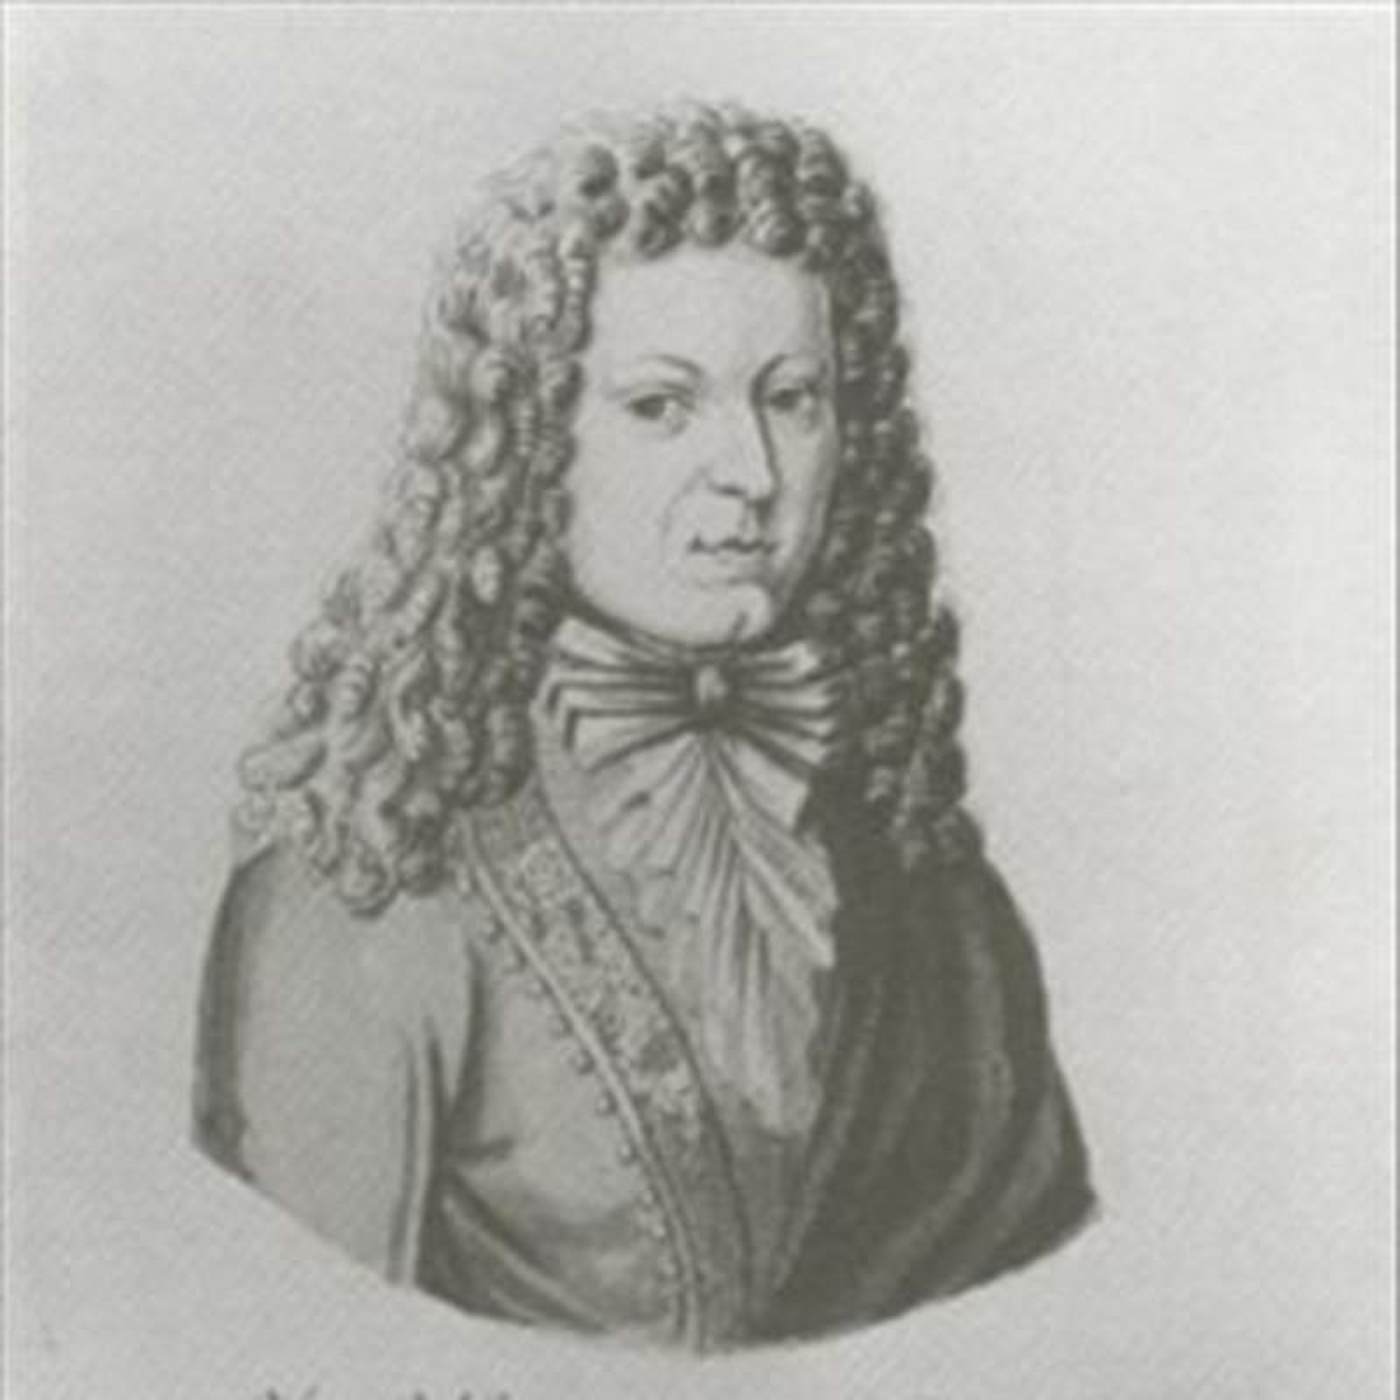 Johann Kuhnau